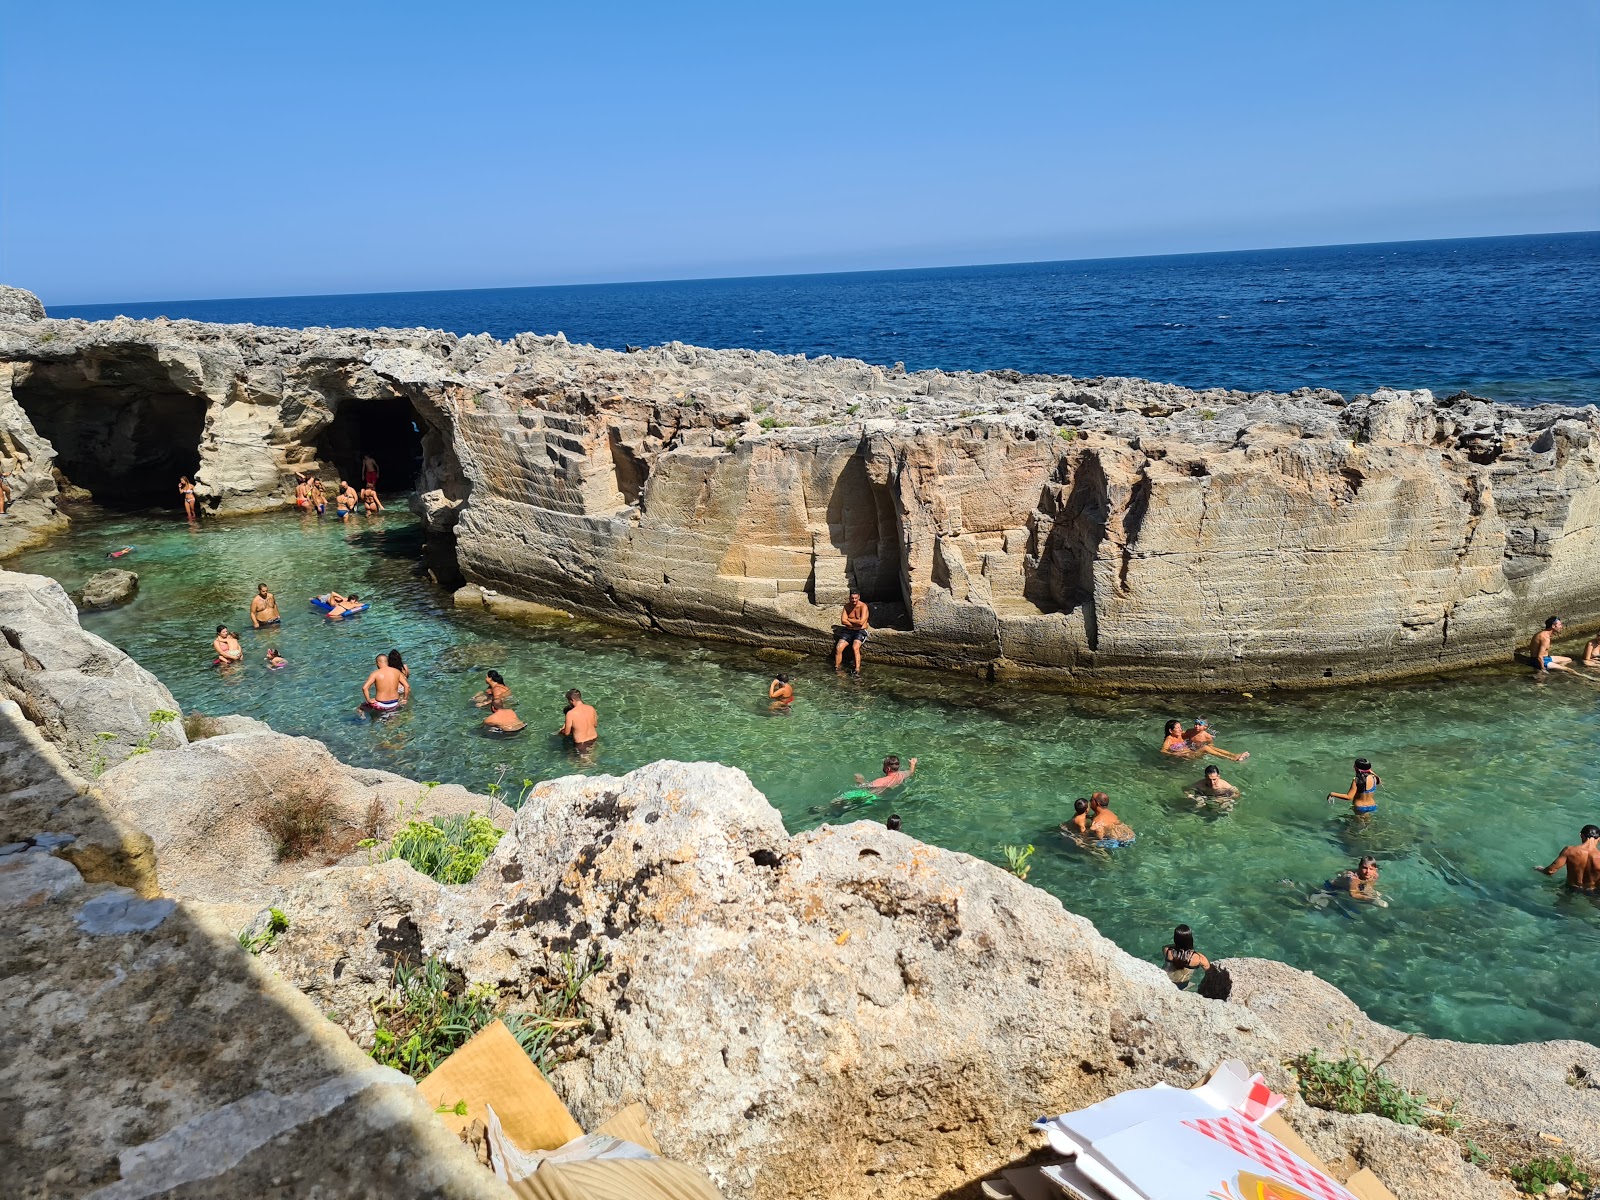 Spiaggia e Piscina Naturale di Marina Serra'in fotoğrafı mavi saf su yüzey ile